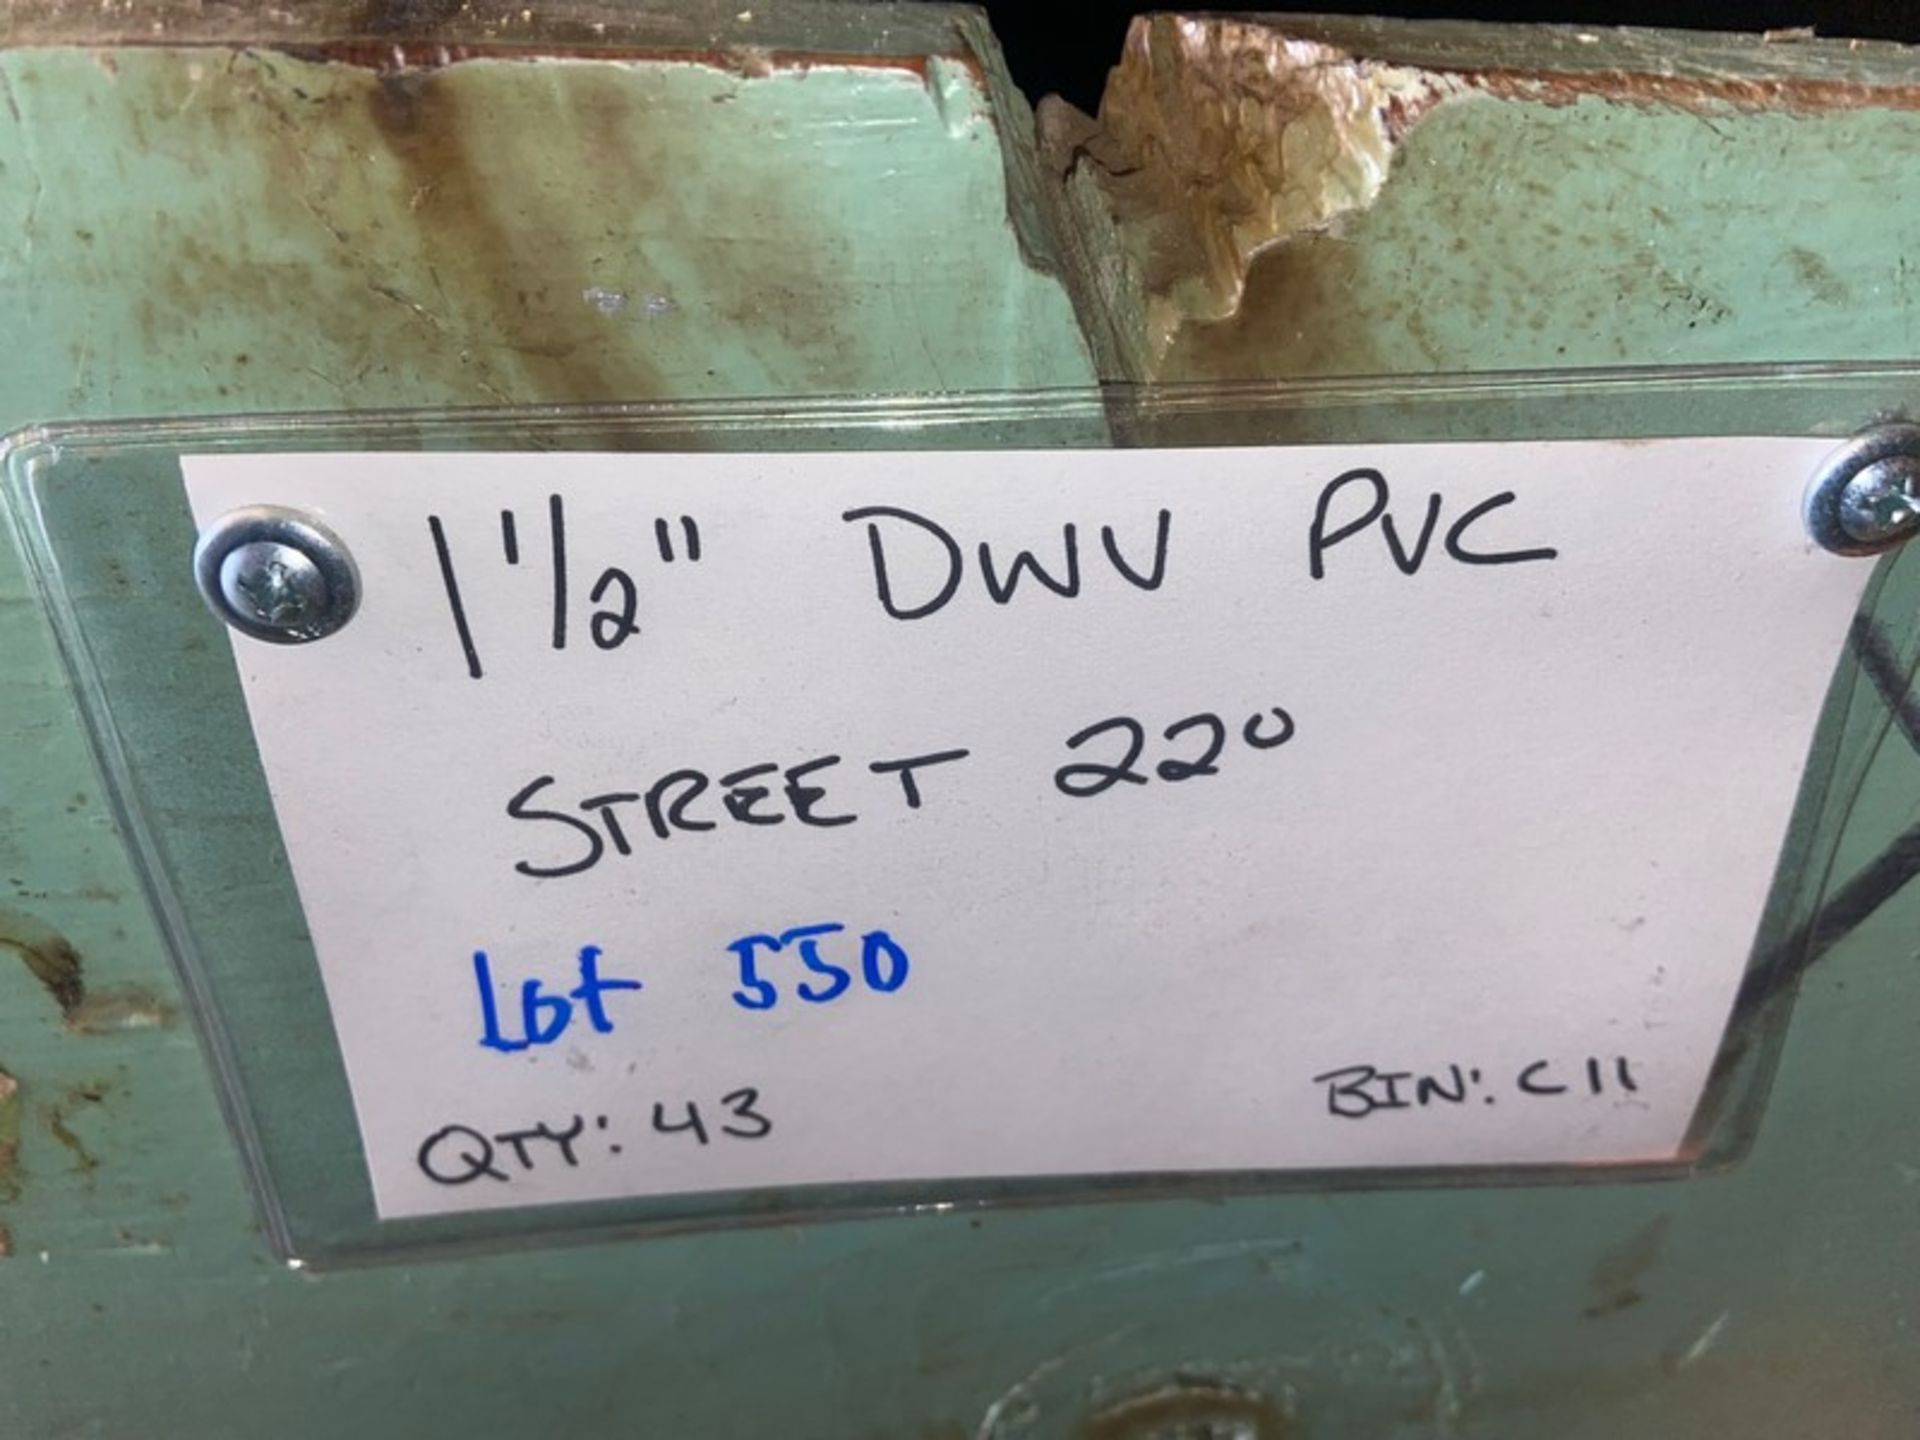 (43) 1 1/2 DWC PVC STREET 22’ (Bin:C11)(LOCATED IN MONROEVILLE, PA) - Image 2 of 4